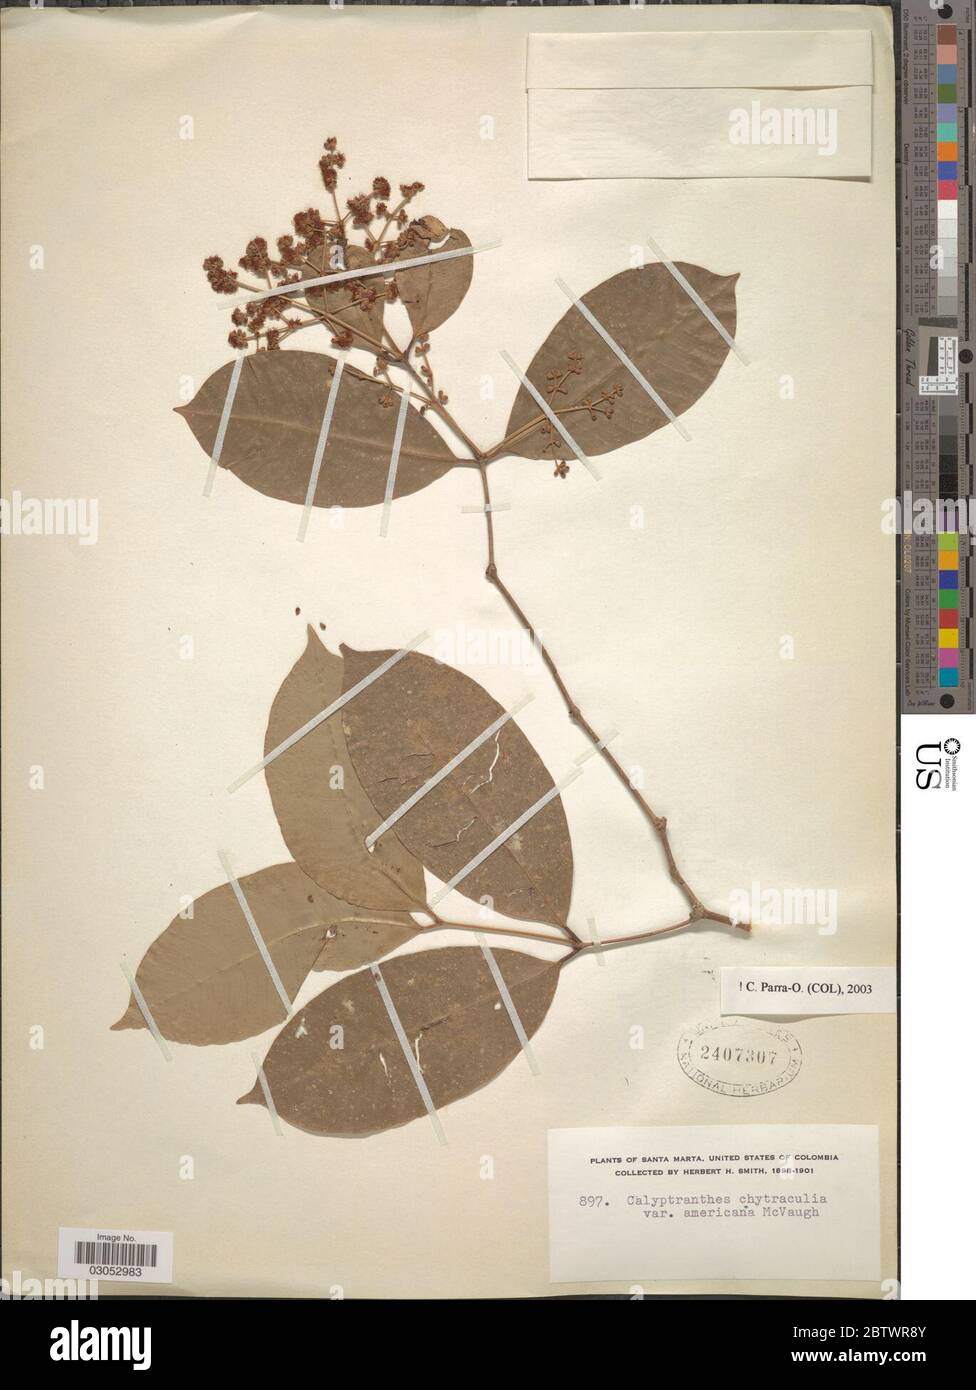 Calyptranthes chytraculia var americana McVaugh. Stock Photo